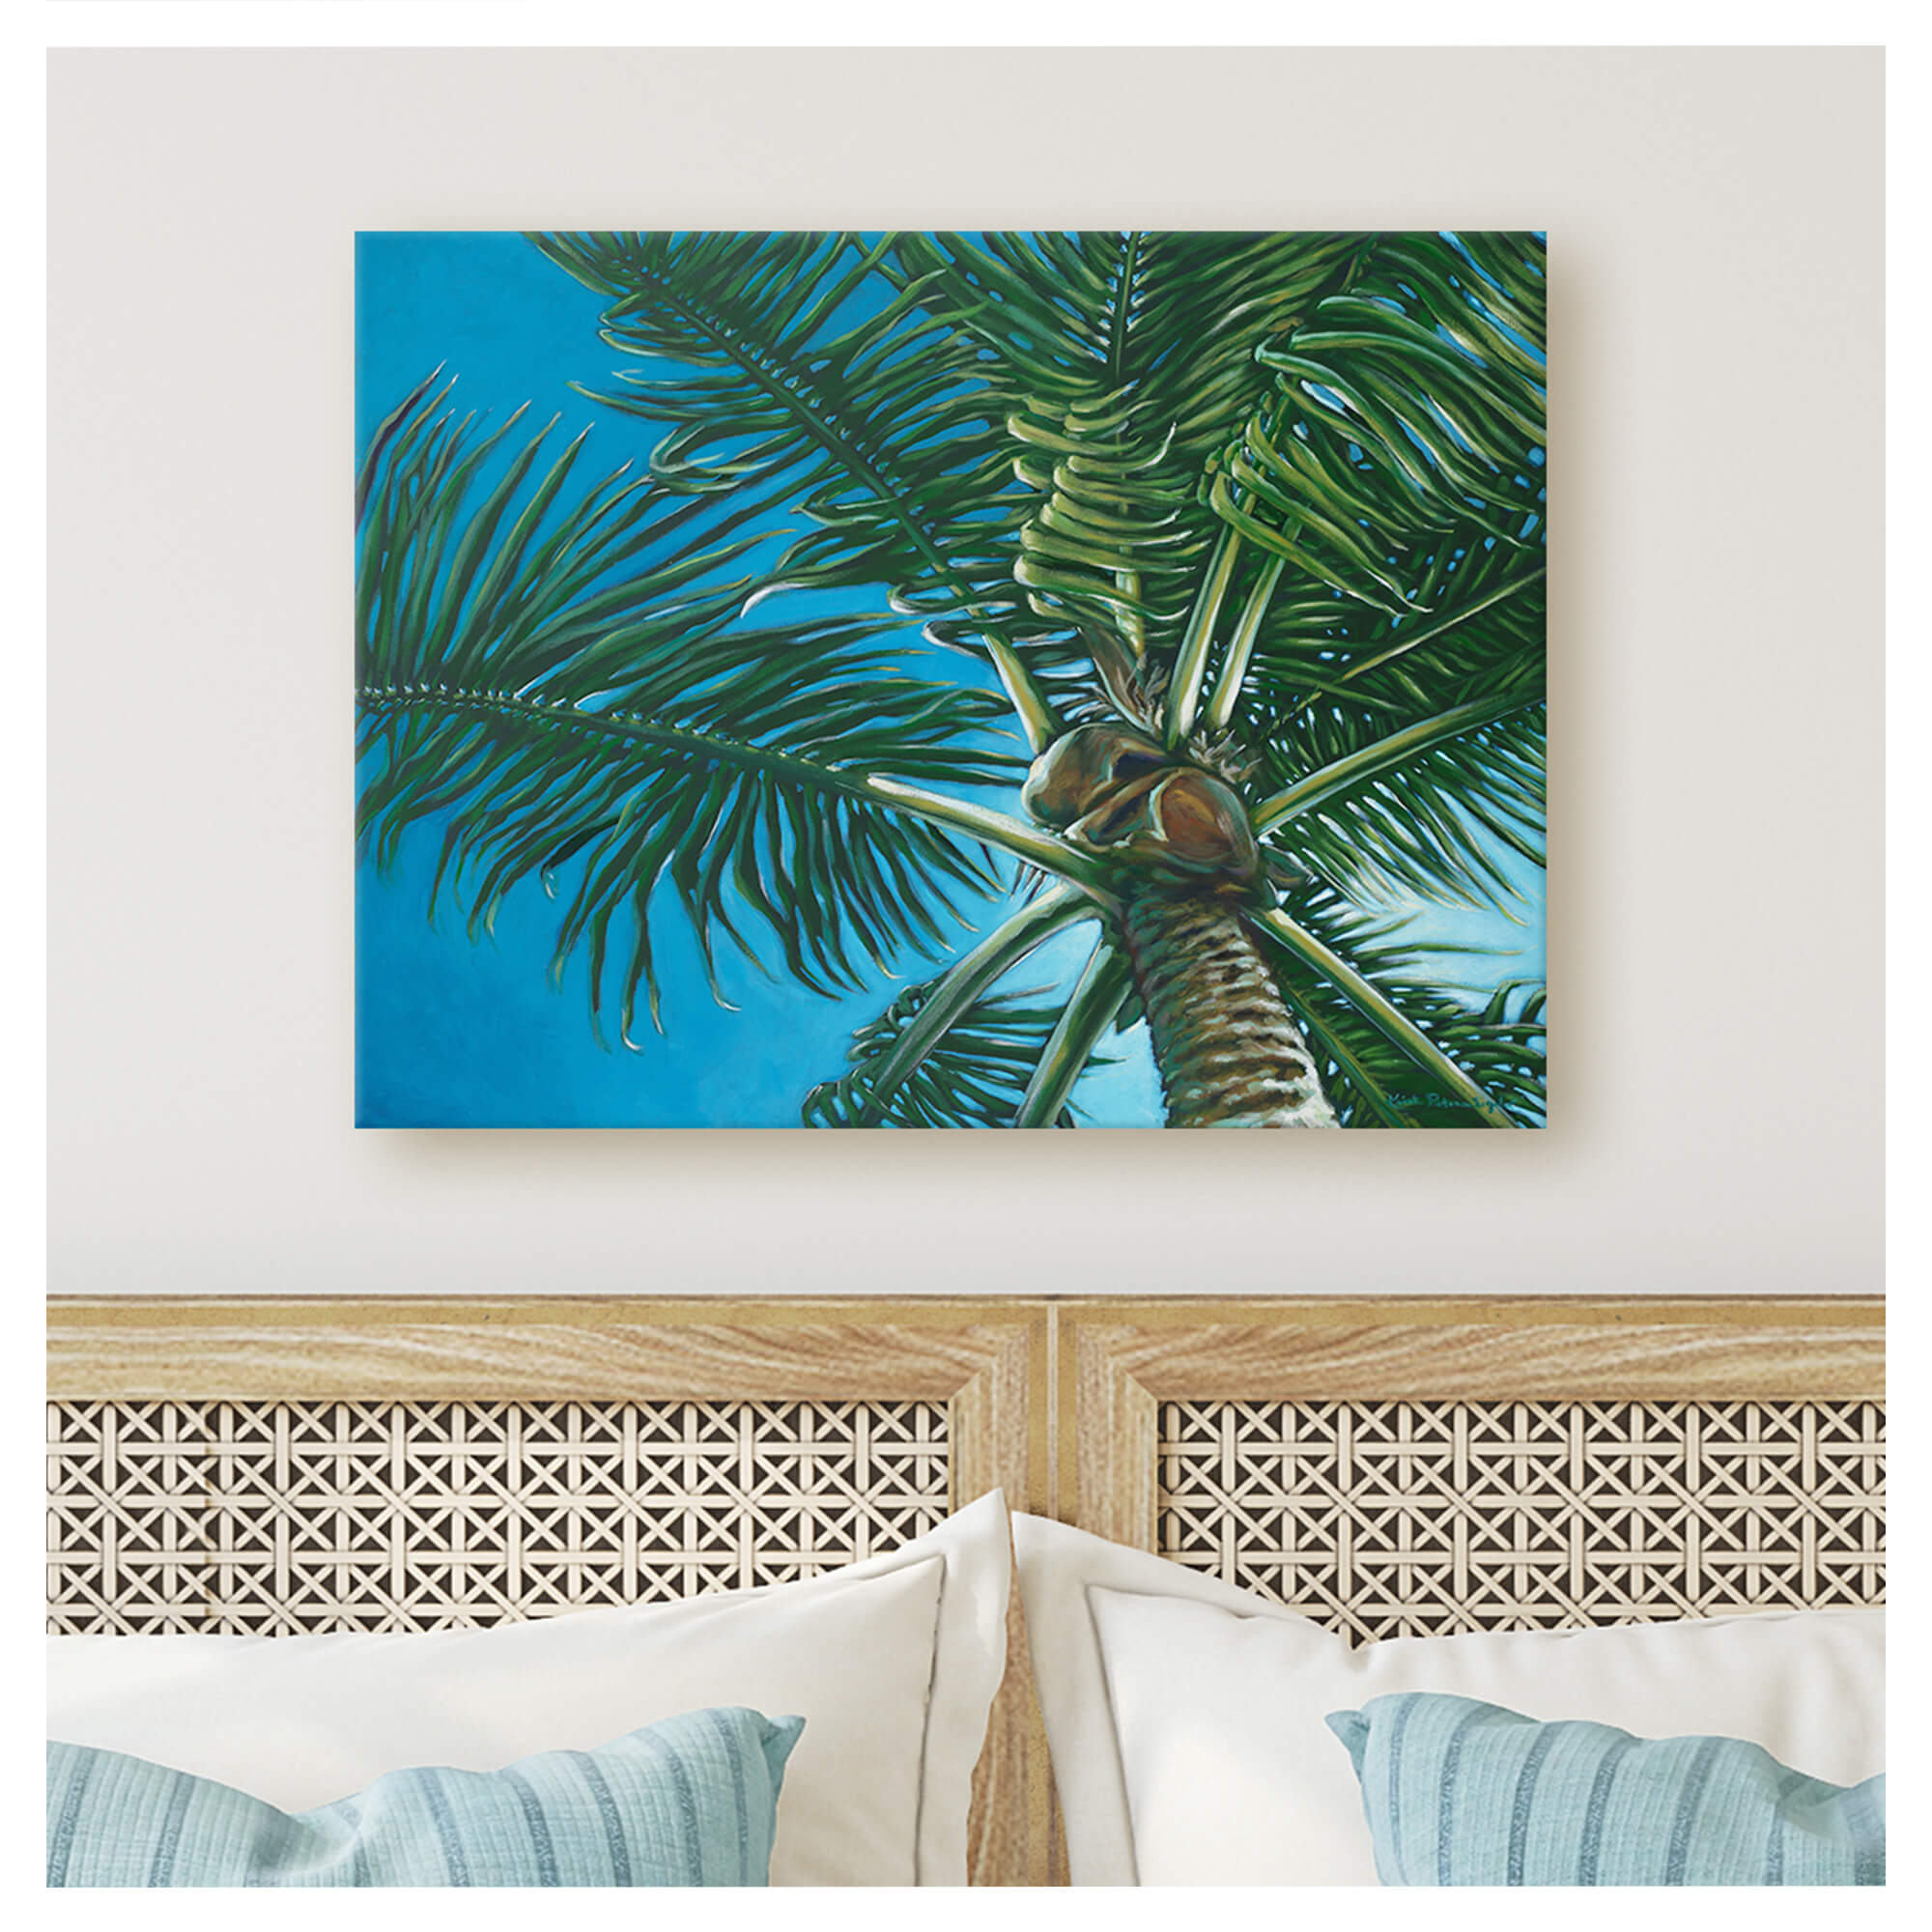 Canvas art print featuring a coconut tree by hawaii artist Kristi Petosa